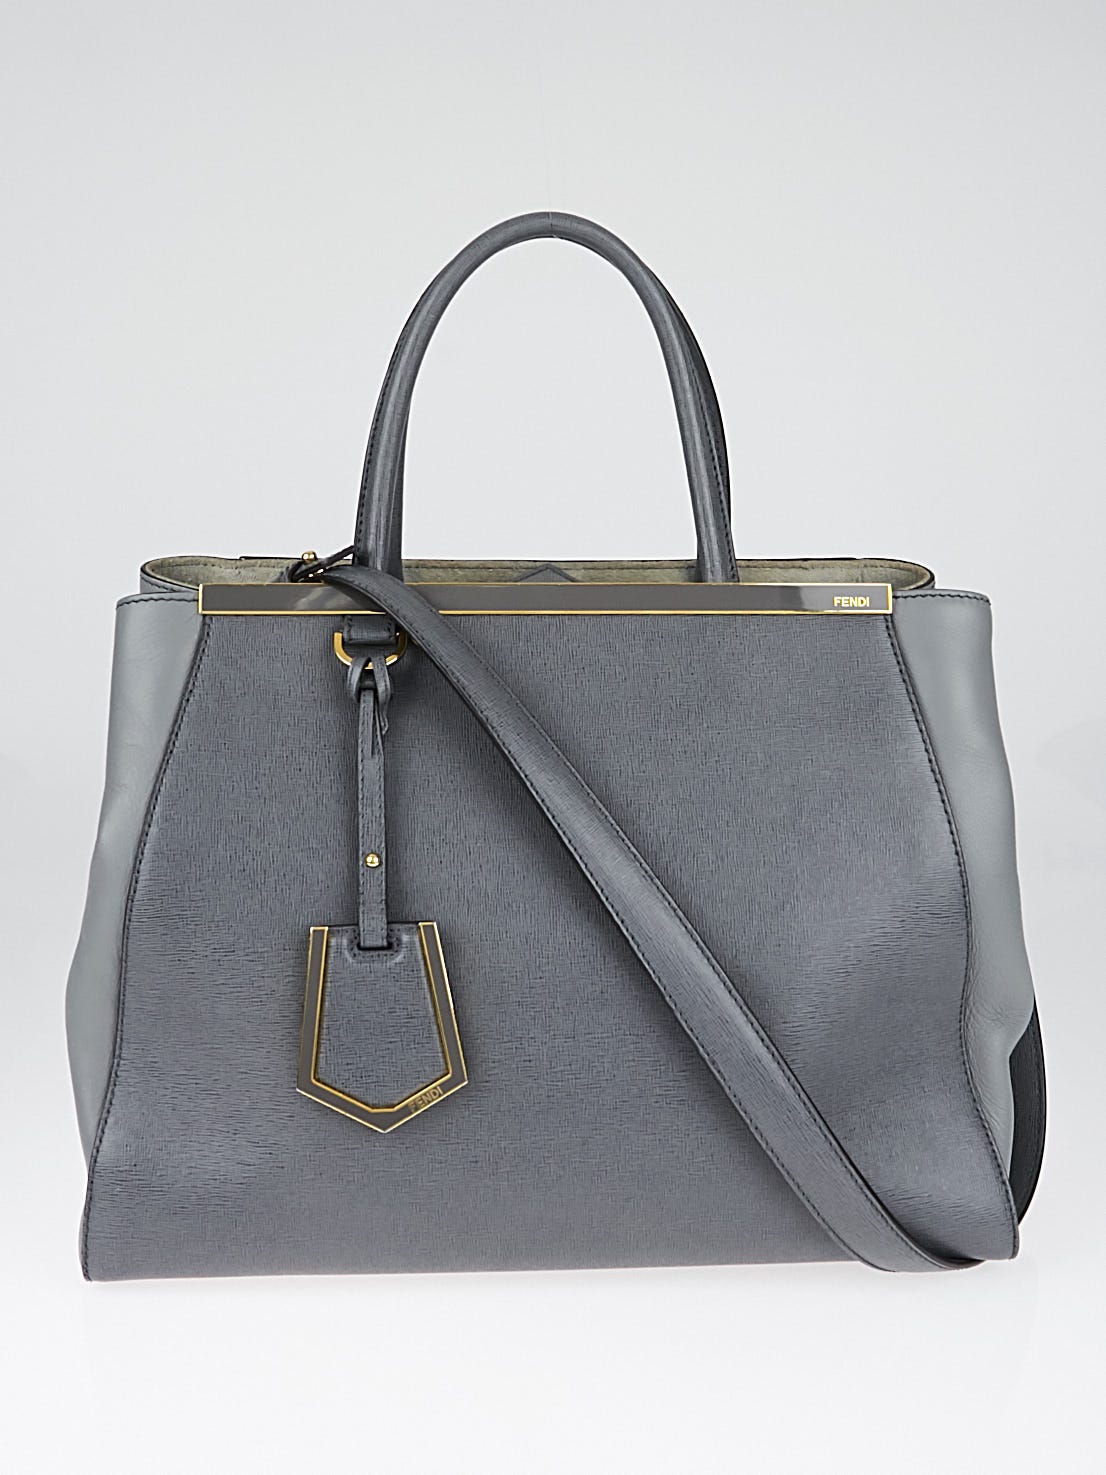 Fendi Grey Saffiano Leather Medium Sac 2Jours Elite Tote Bag 8bh250